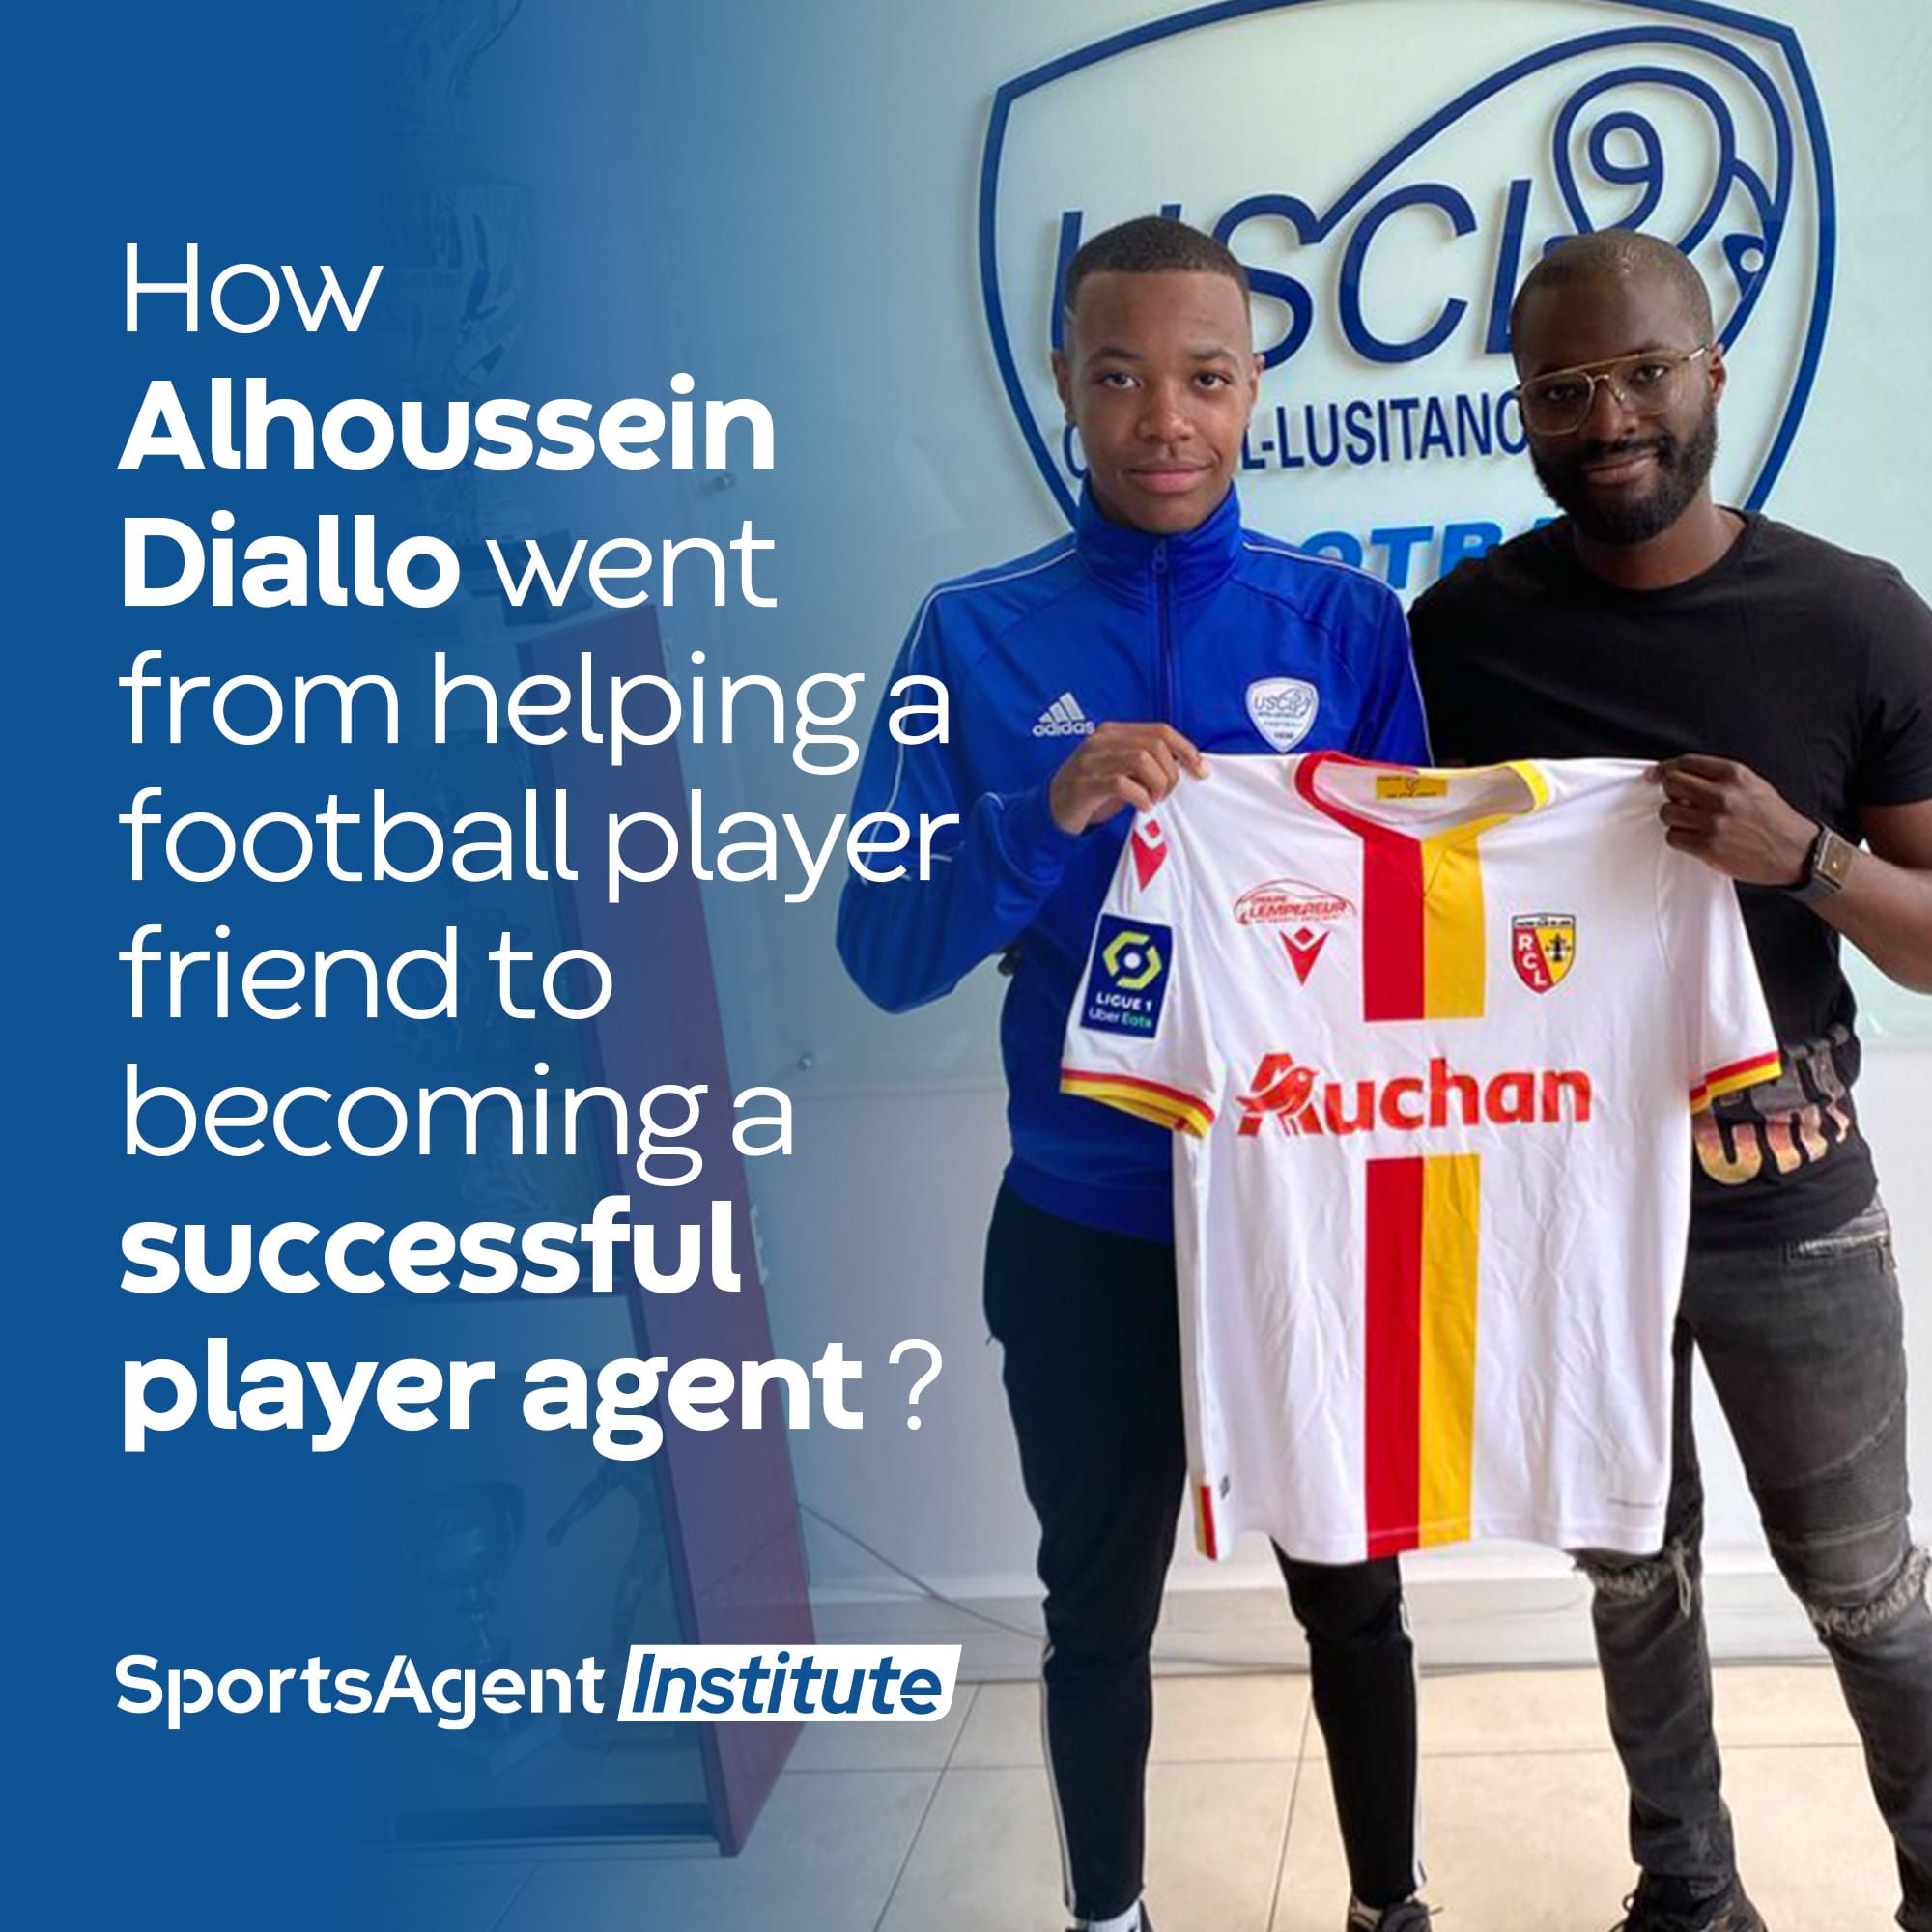 alhoussein-diallo-player-agent-helping-footballer-friend